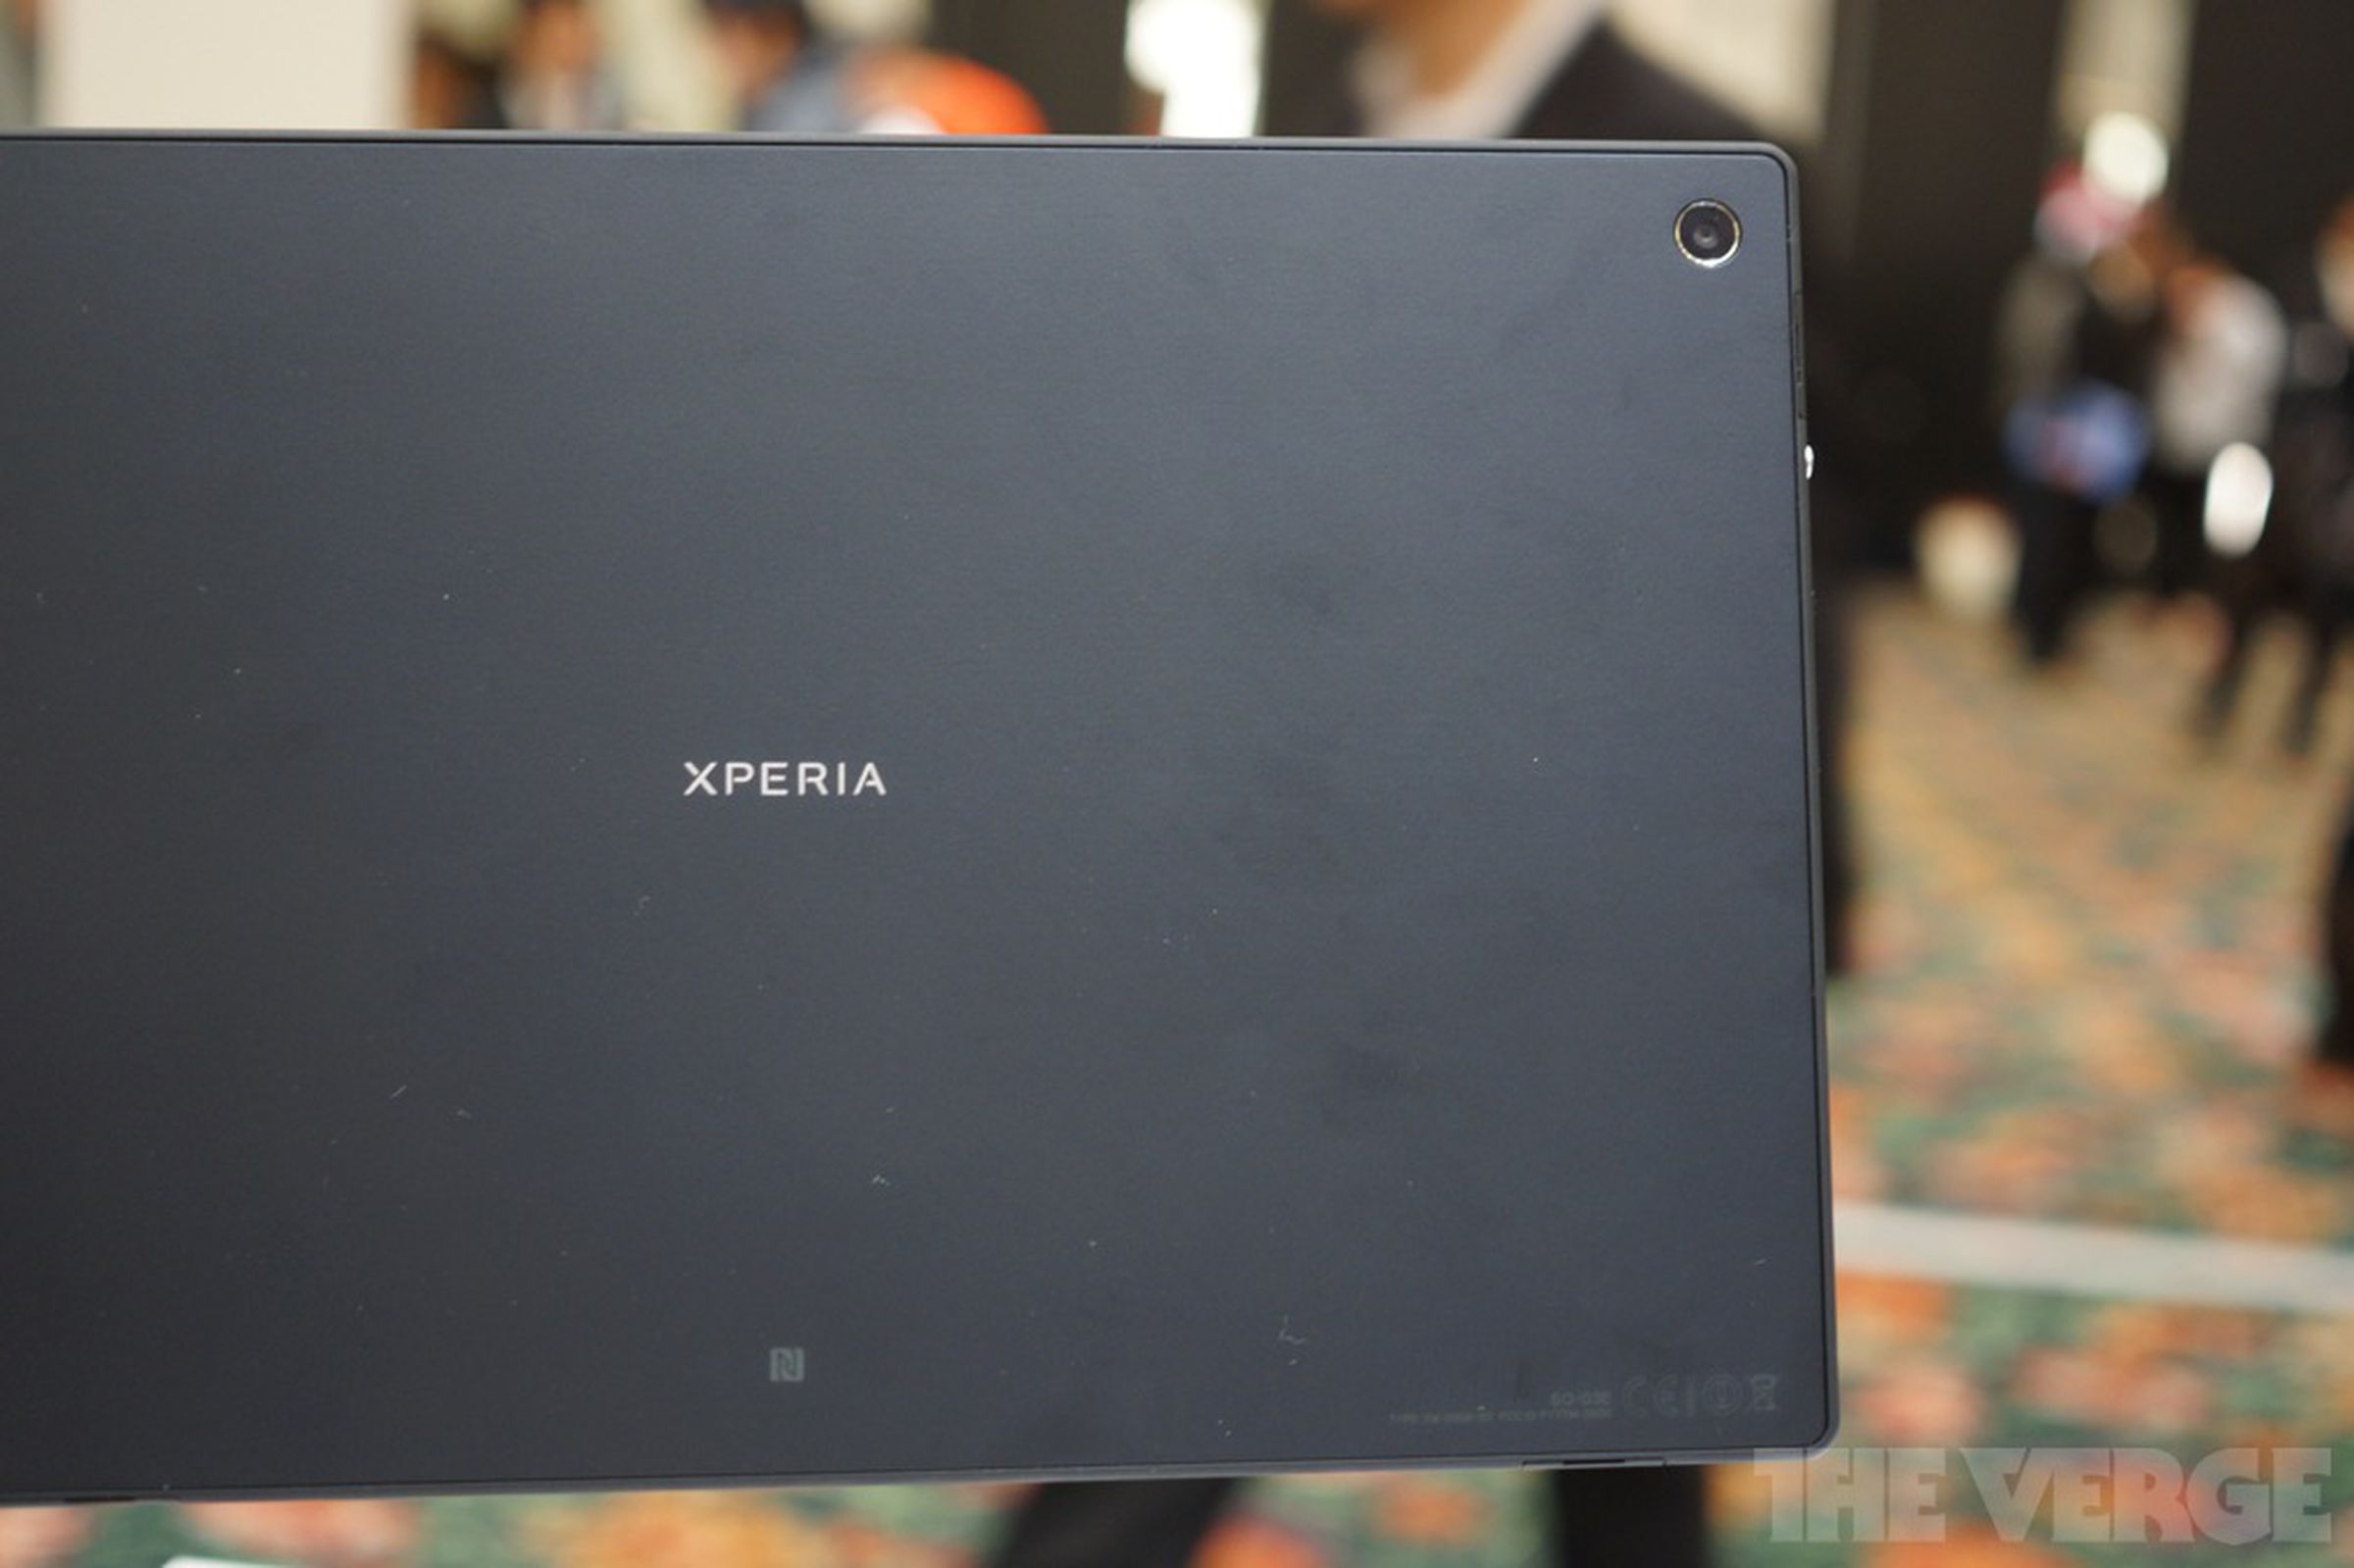 Sony Xperia Tablet Z photos